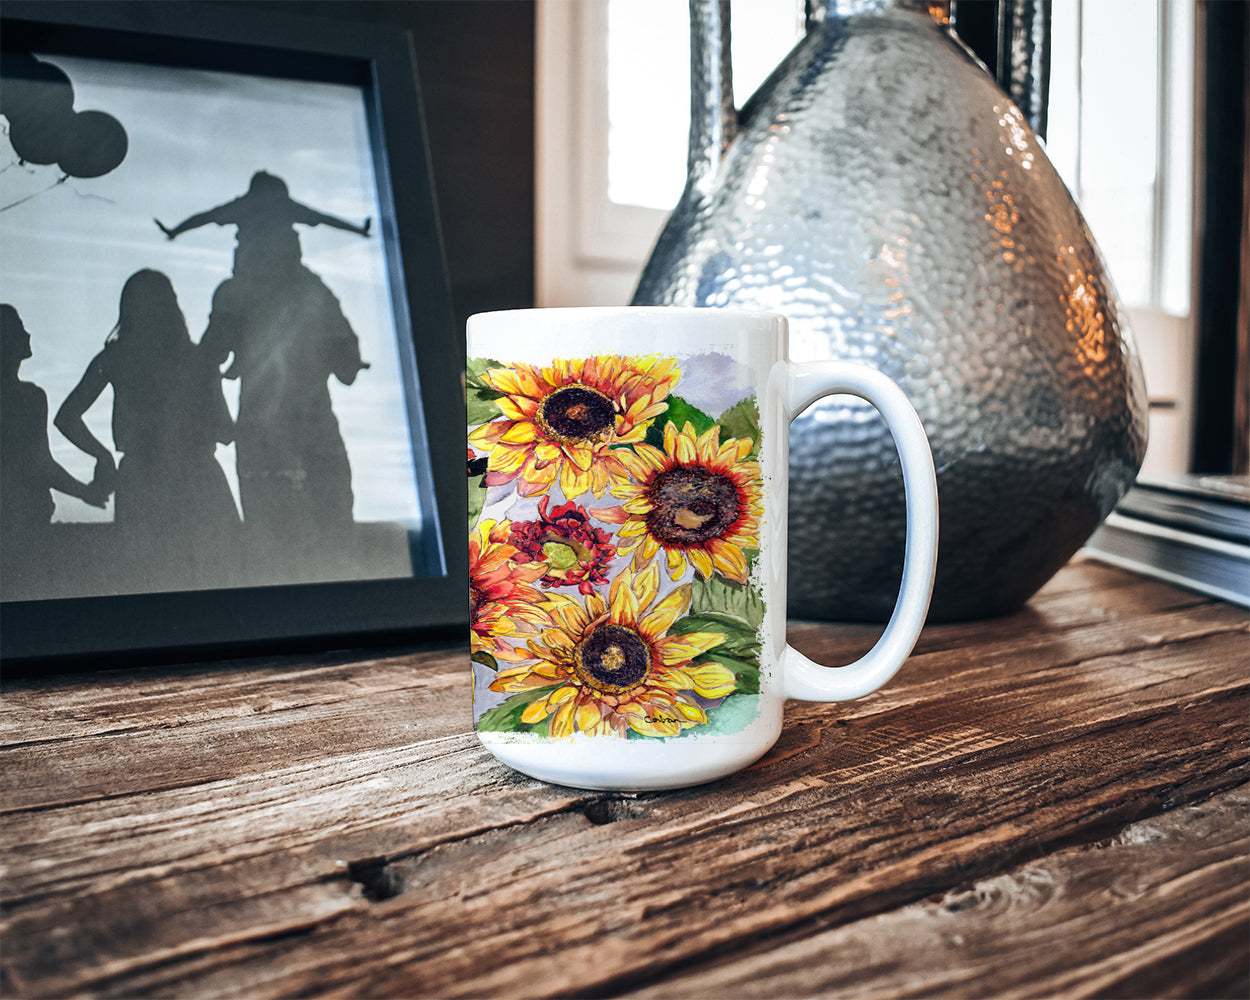 Sunflowers Dishwasher Safe Microwavable Ceramic Coffee Mug 15 ounce 8766CM15